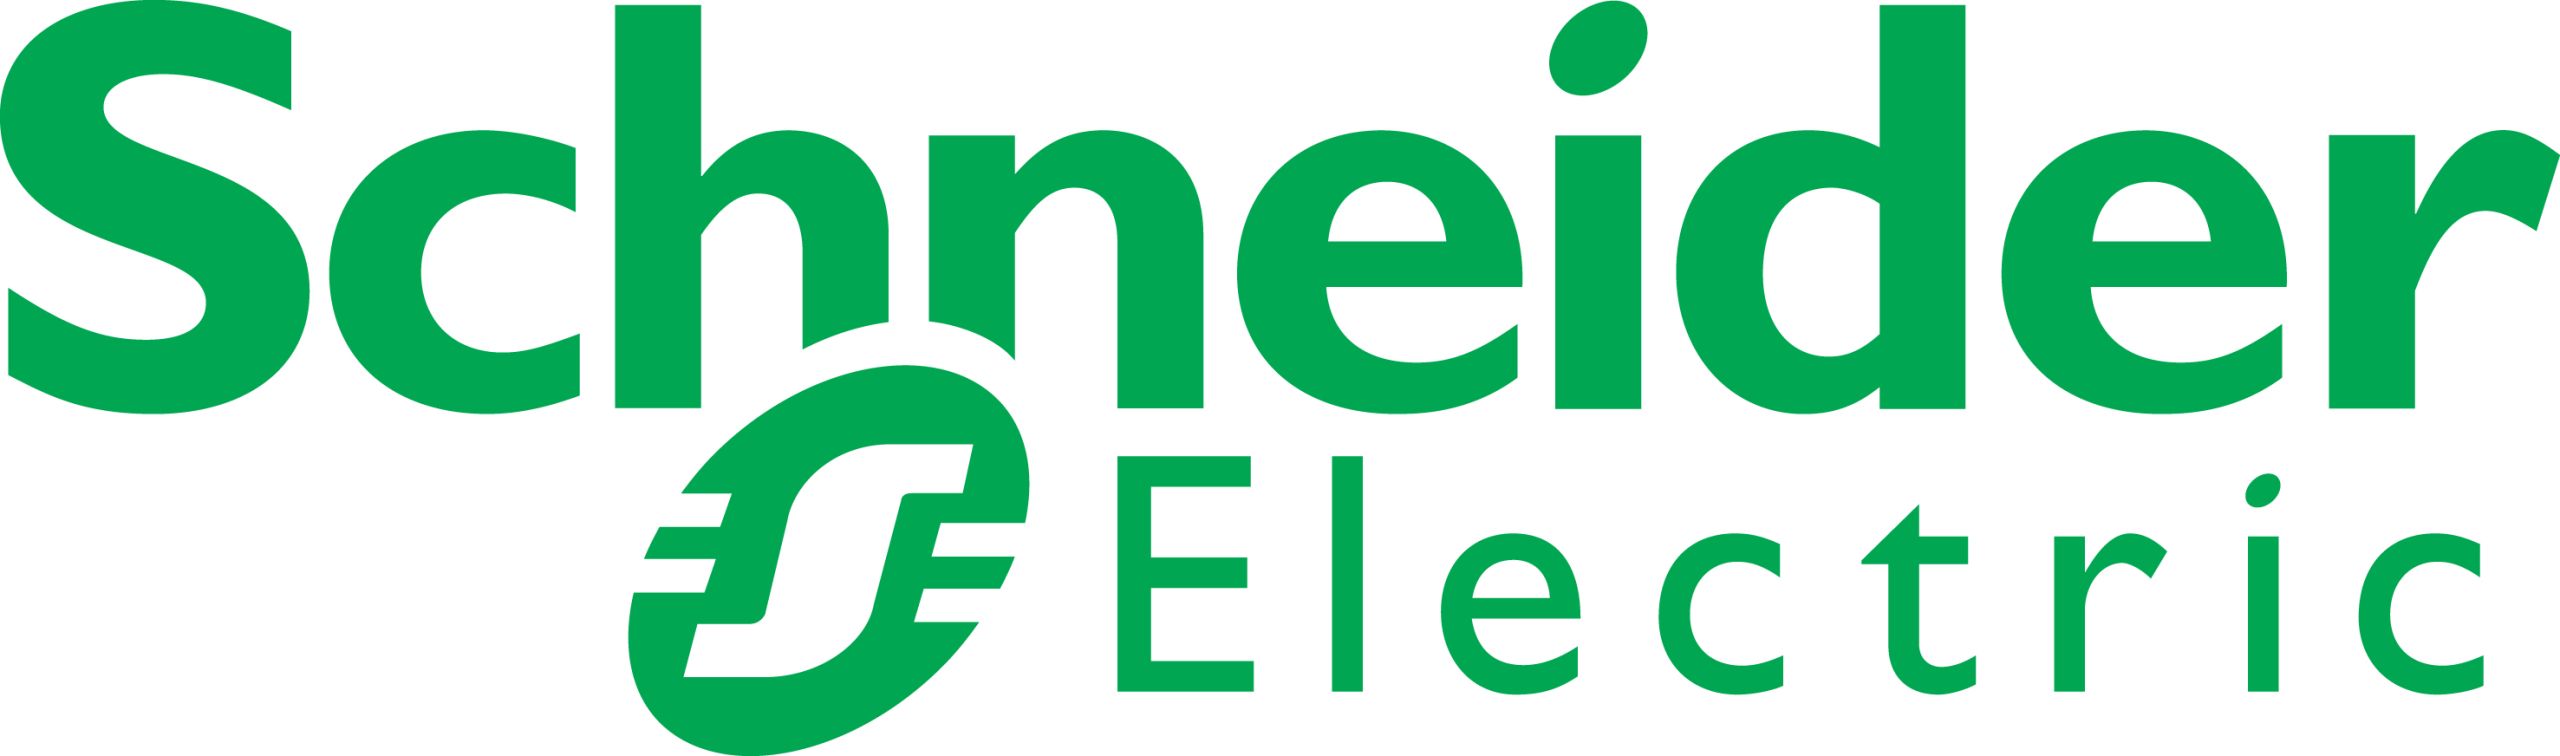 ملف:Schneider-Electric-Logo.jpg - ويكيبيديا